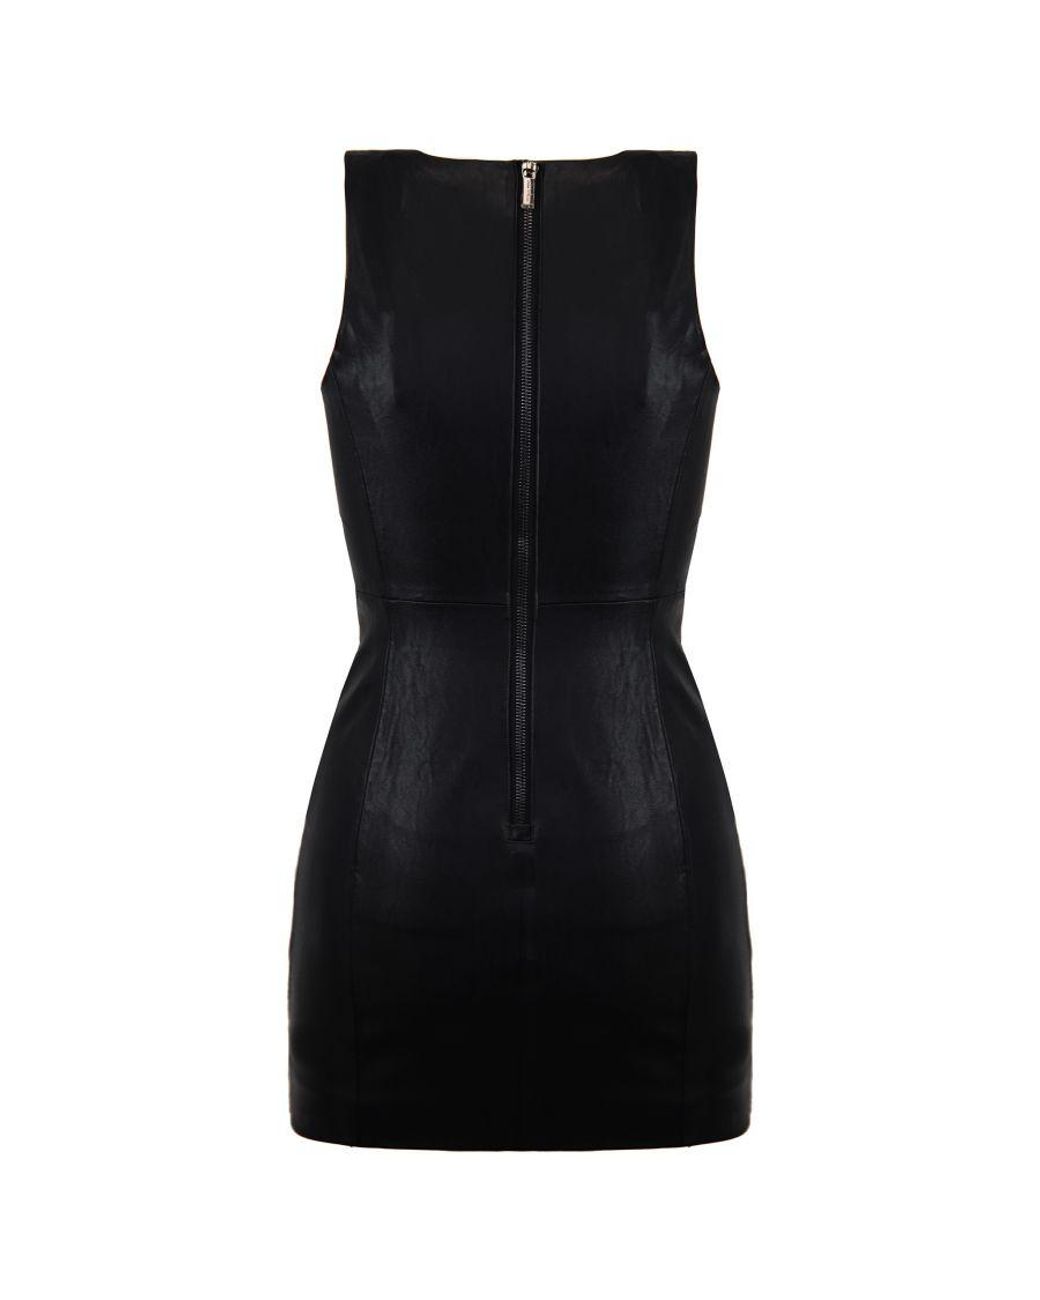 Armani Exchange Black Leather Dress 3gya47 Ynabz 1200